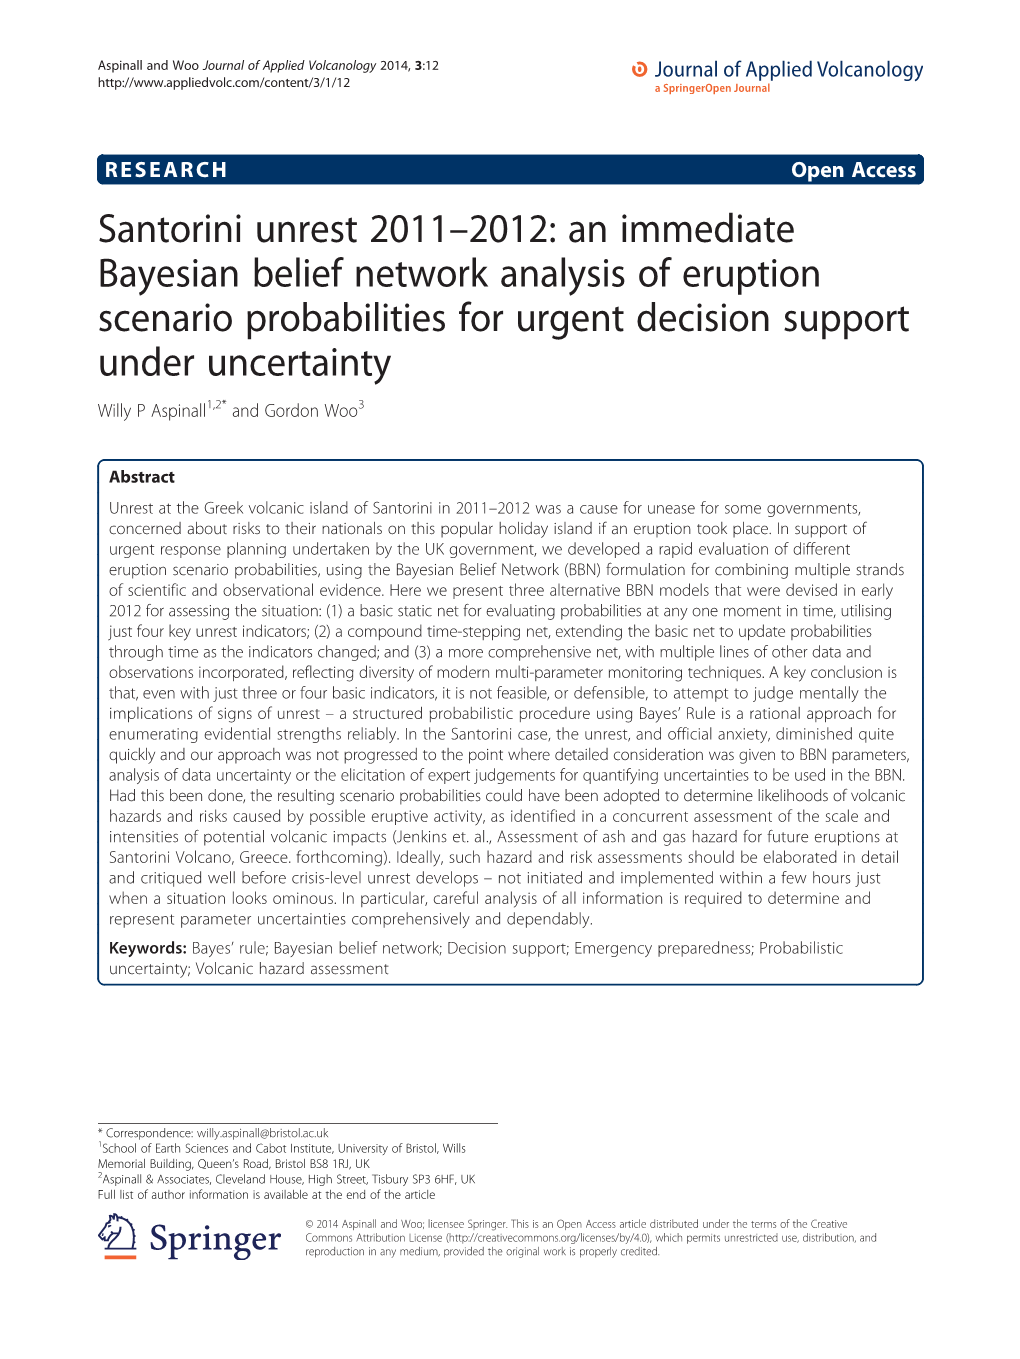 Santorini Unrest 2011-2012: an Immediate Bayesian Belief Network